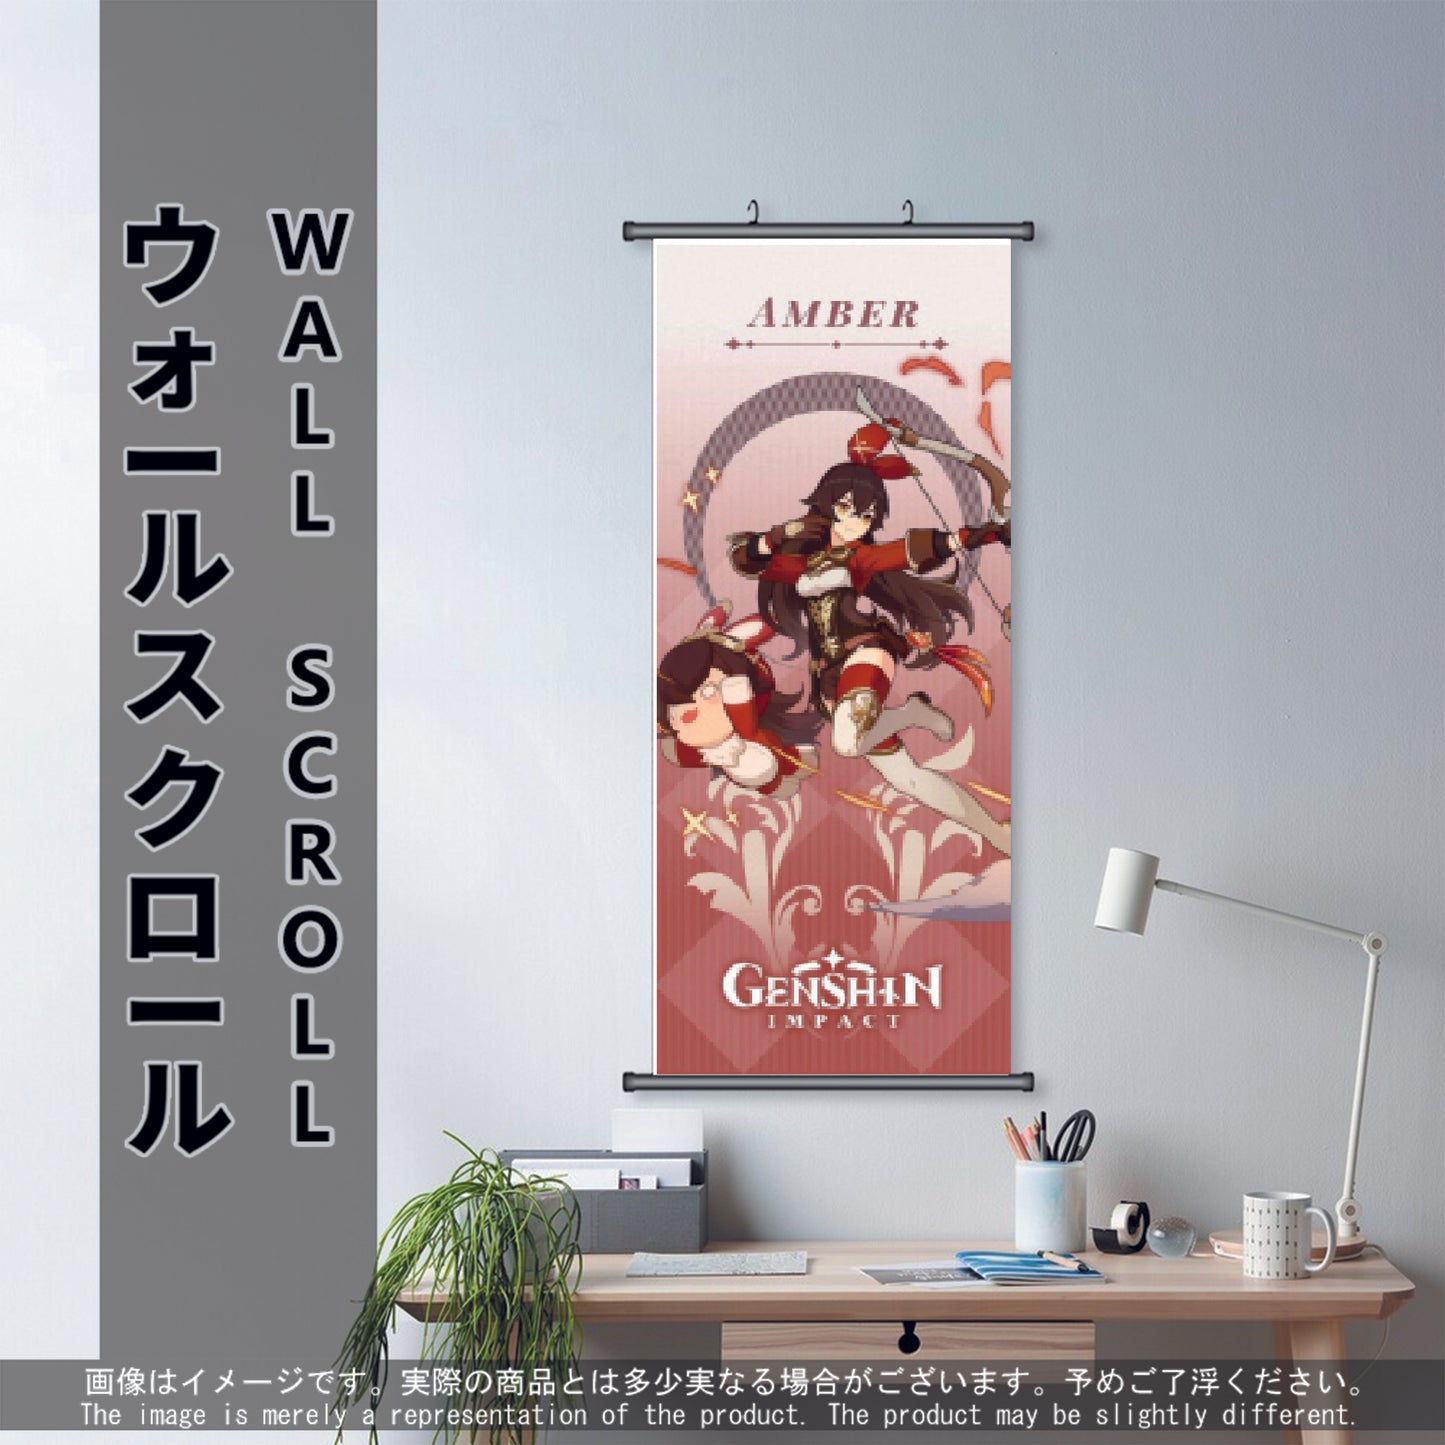 (GSN-PYRO-03) AMBER Genshin Impact Anime Wall Scroll